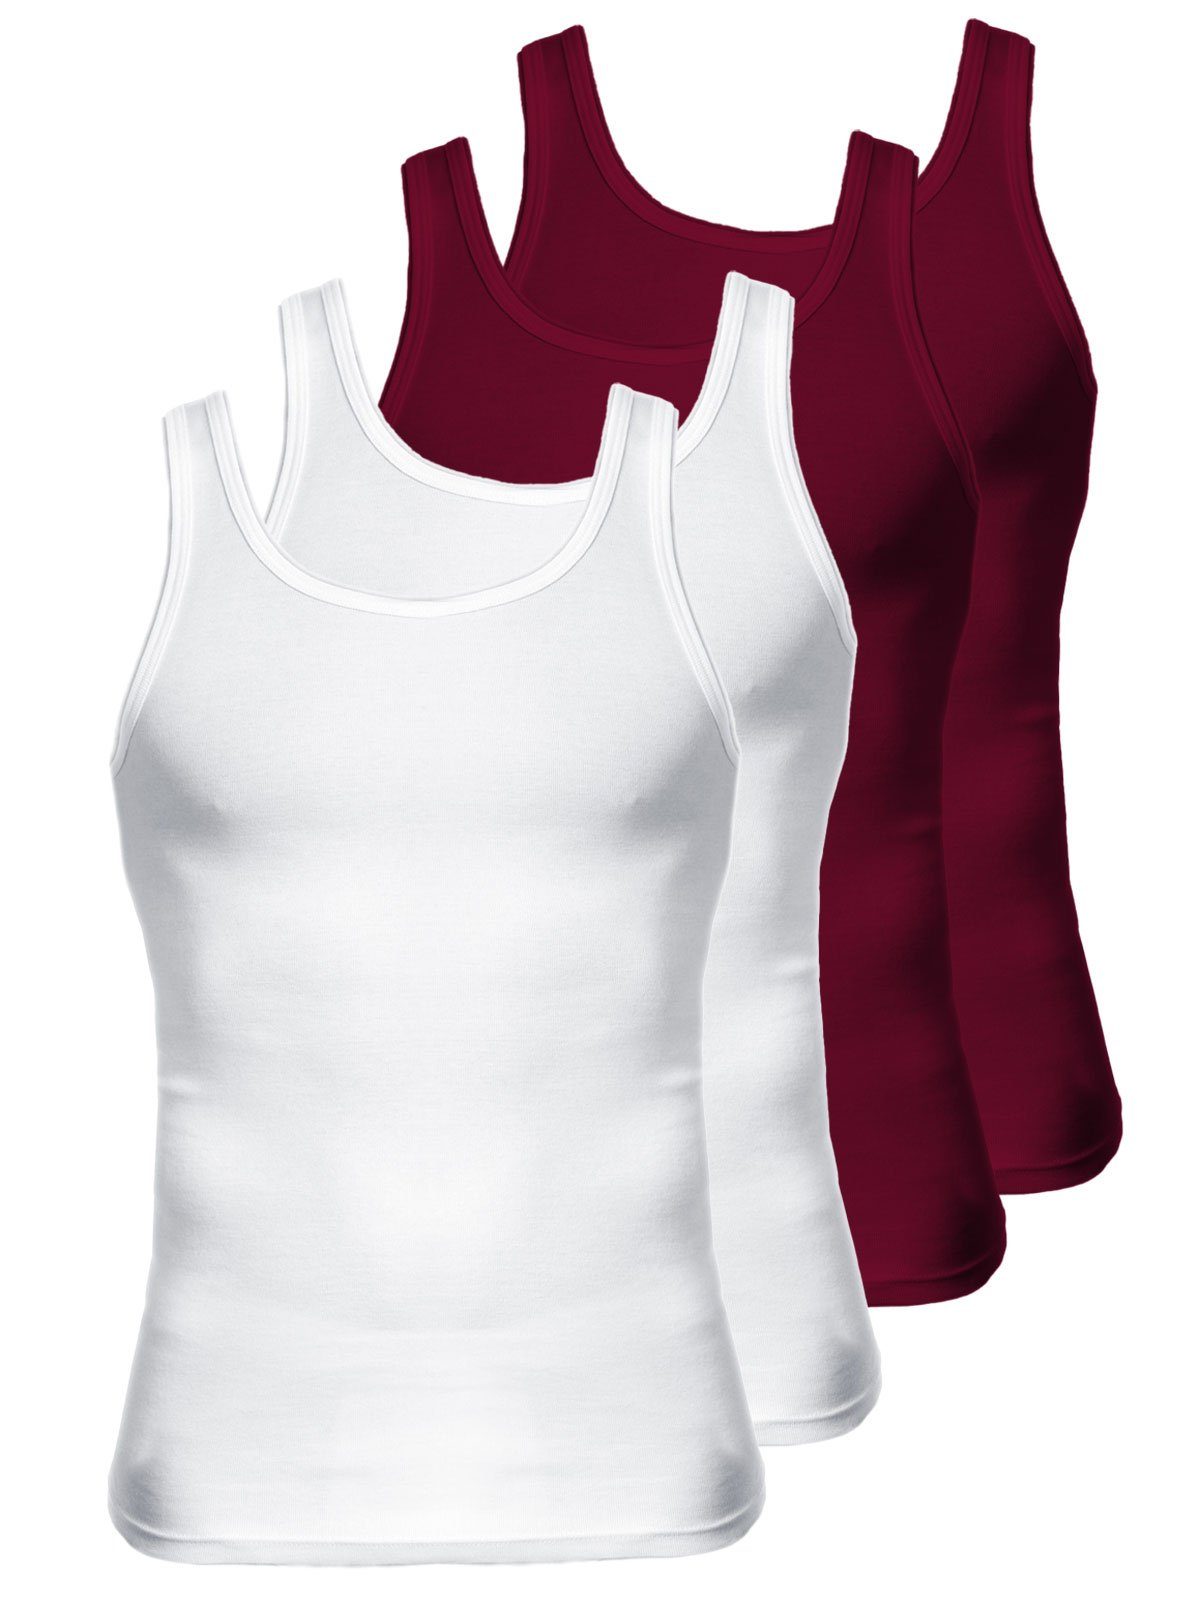 KUMPF Achselhemd 4er Sparpack Cotton Herren - Bio rubin Unterhemd (Spar-Set, 4-St) weiss